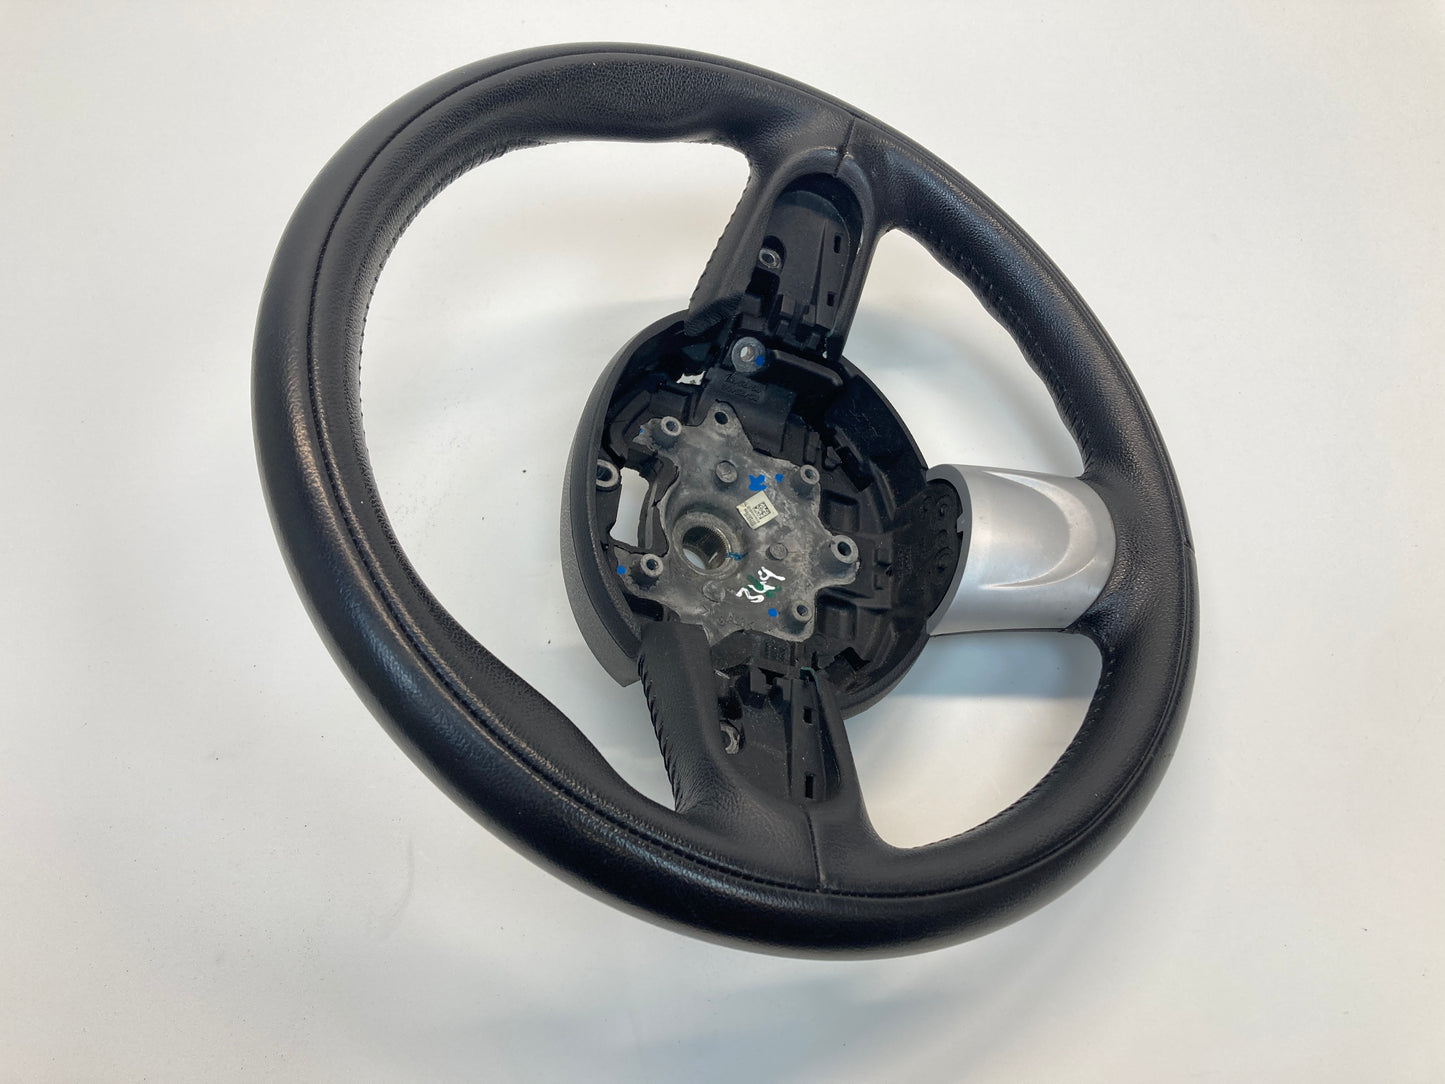 Mini Cooper Sports Wheel Leather Automatic 32306794625 07-16 R5x R6x 349